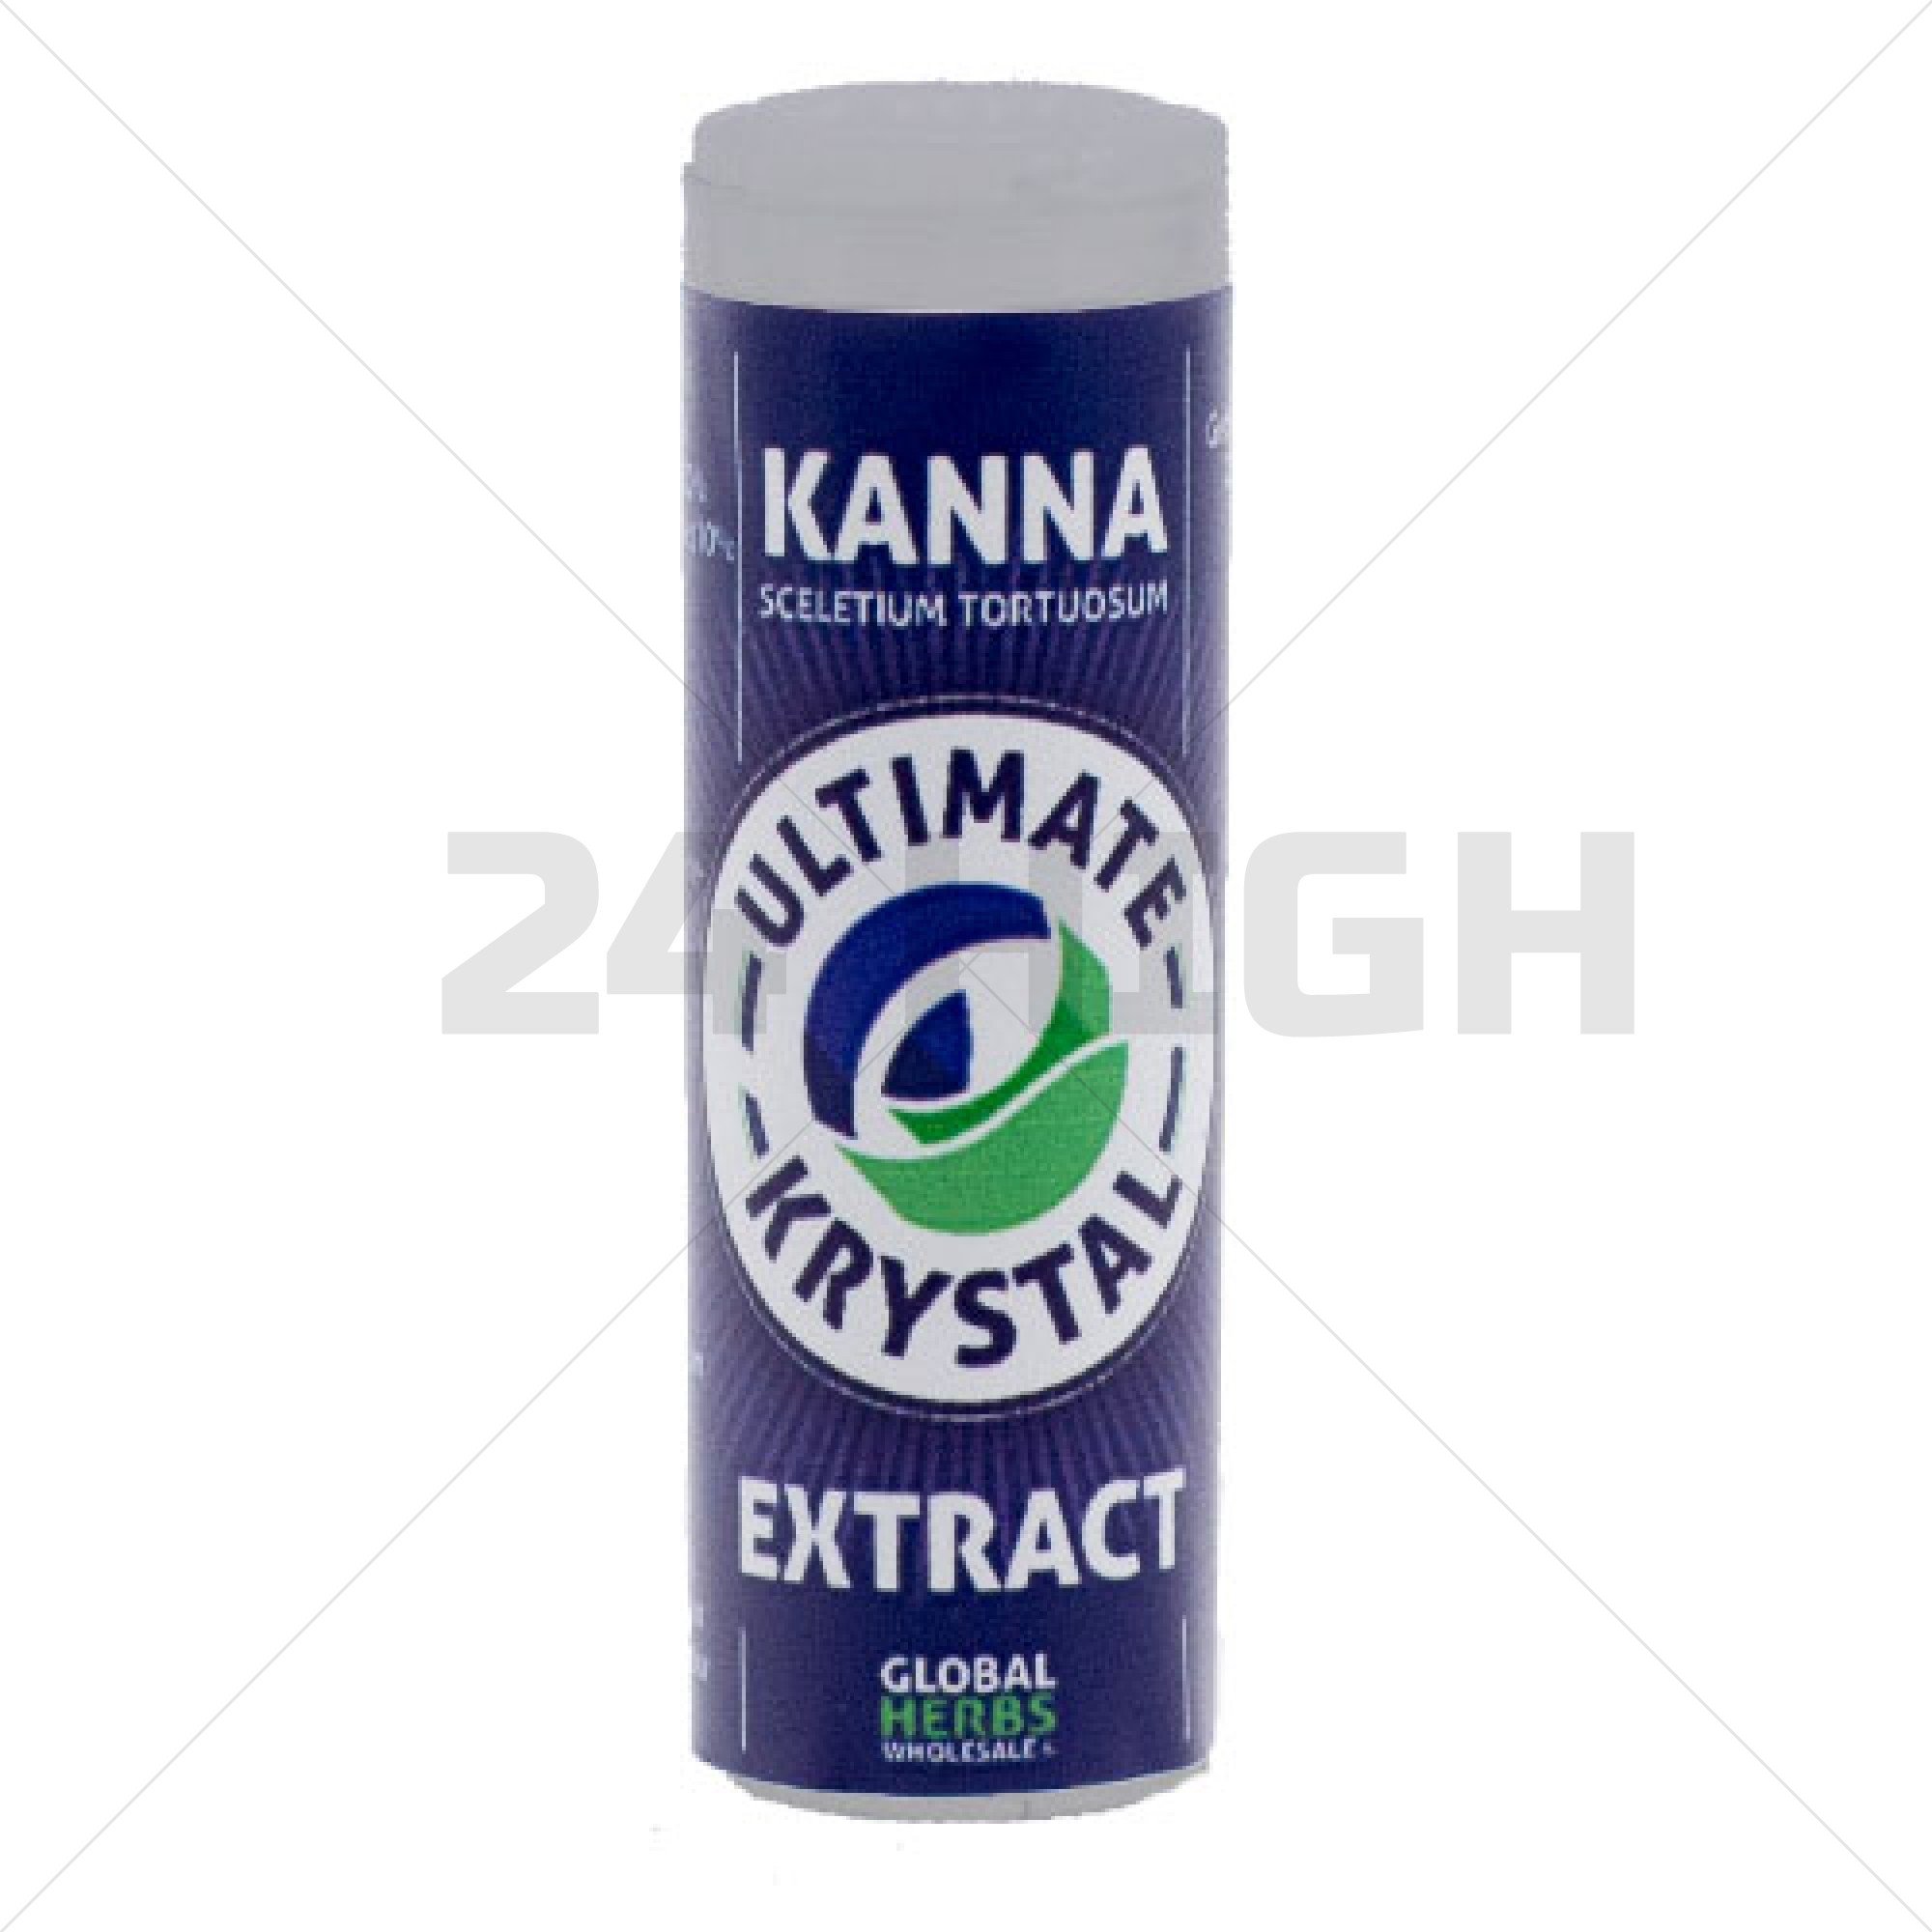 Kanna Krystal Ultimate Extract - 1g | Sceletium Tortuosum